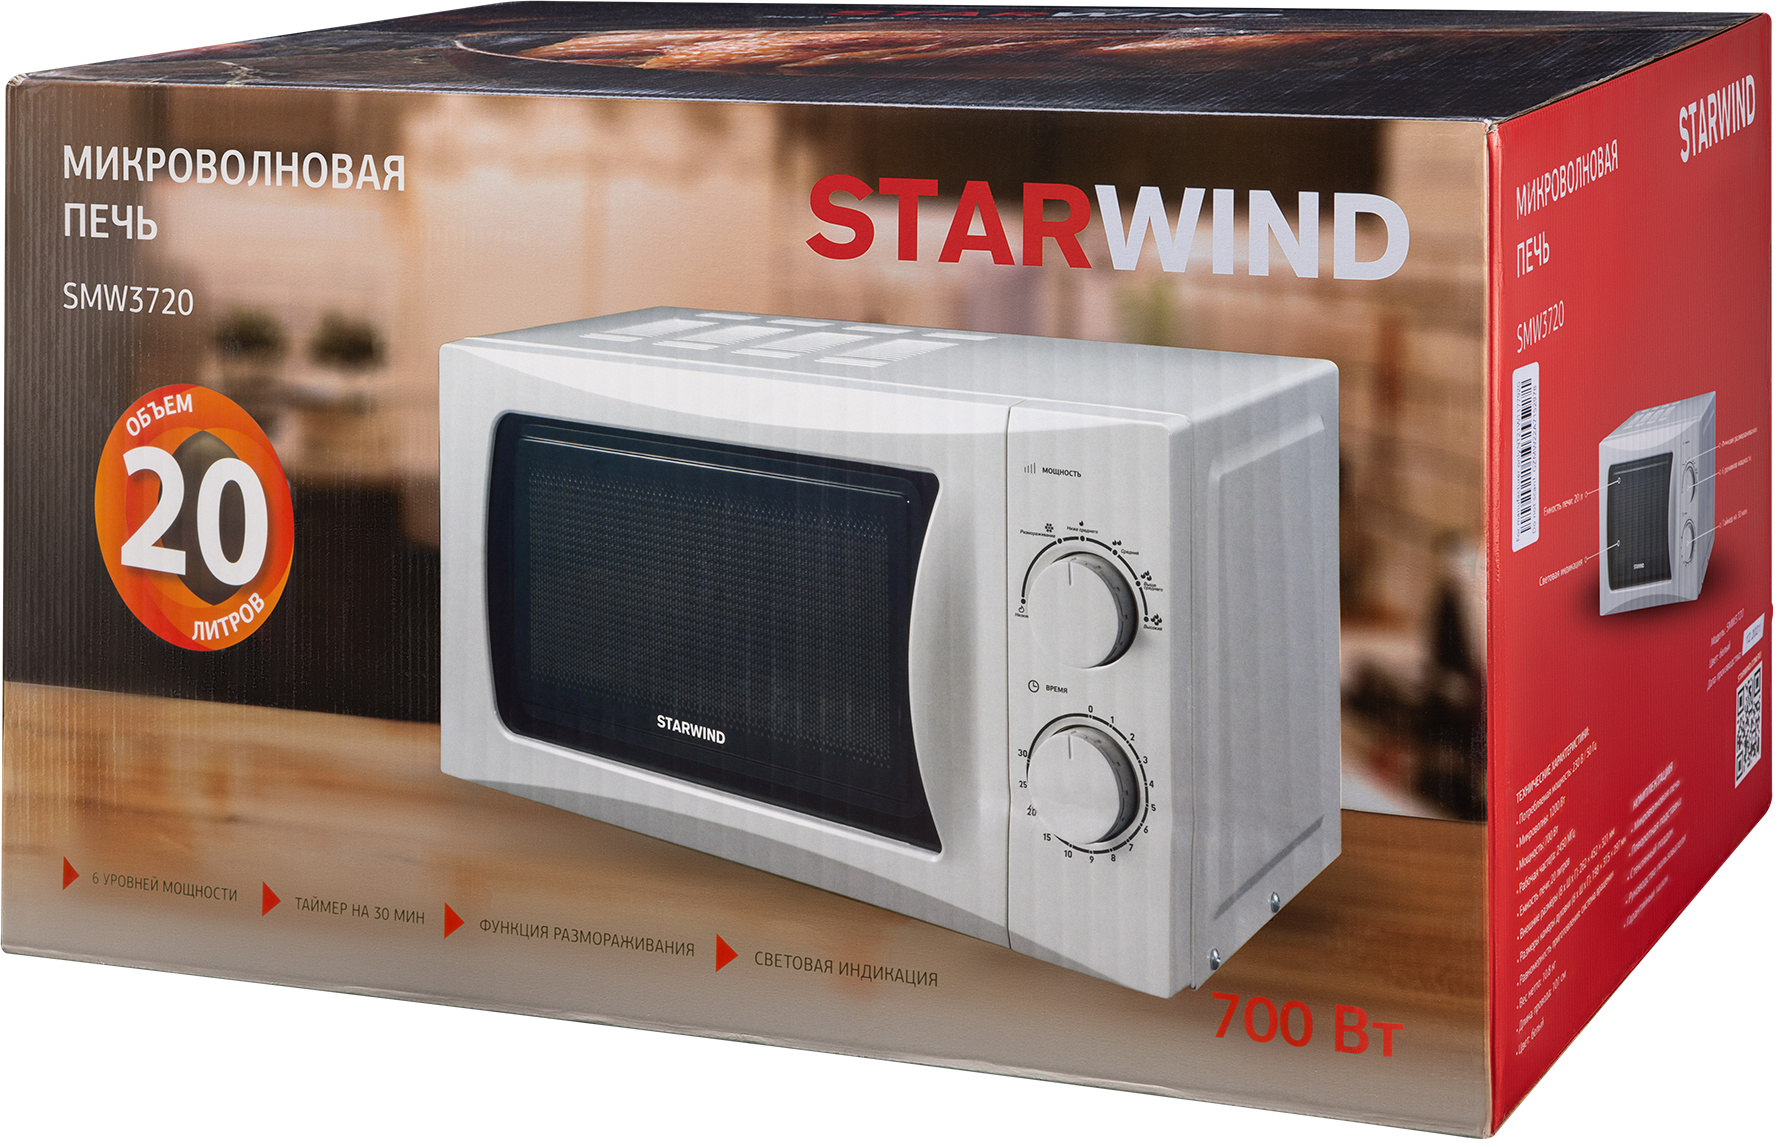 Микроволновая печь Starwind SMW3720 белый от магазина Старвинд